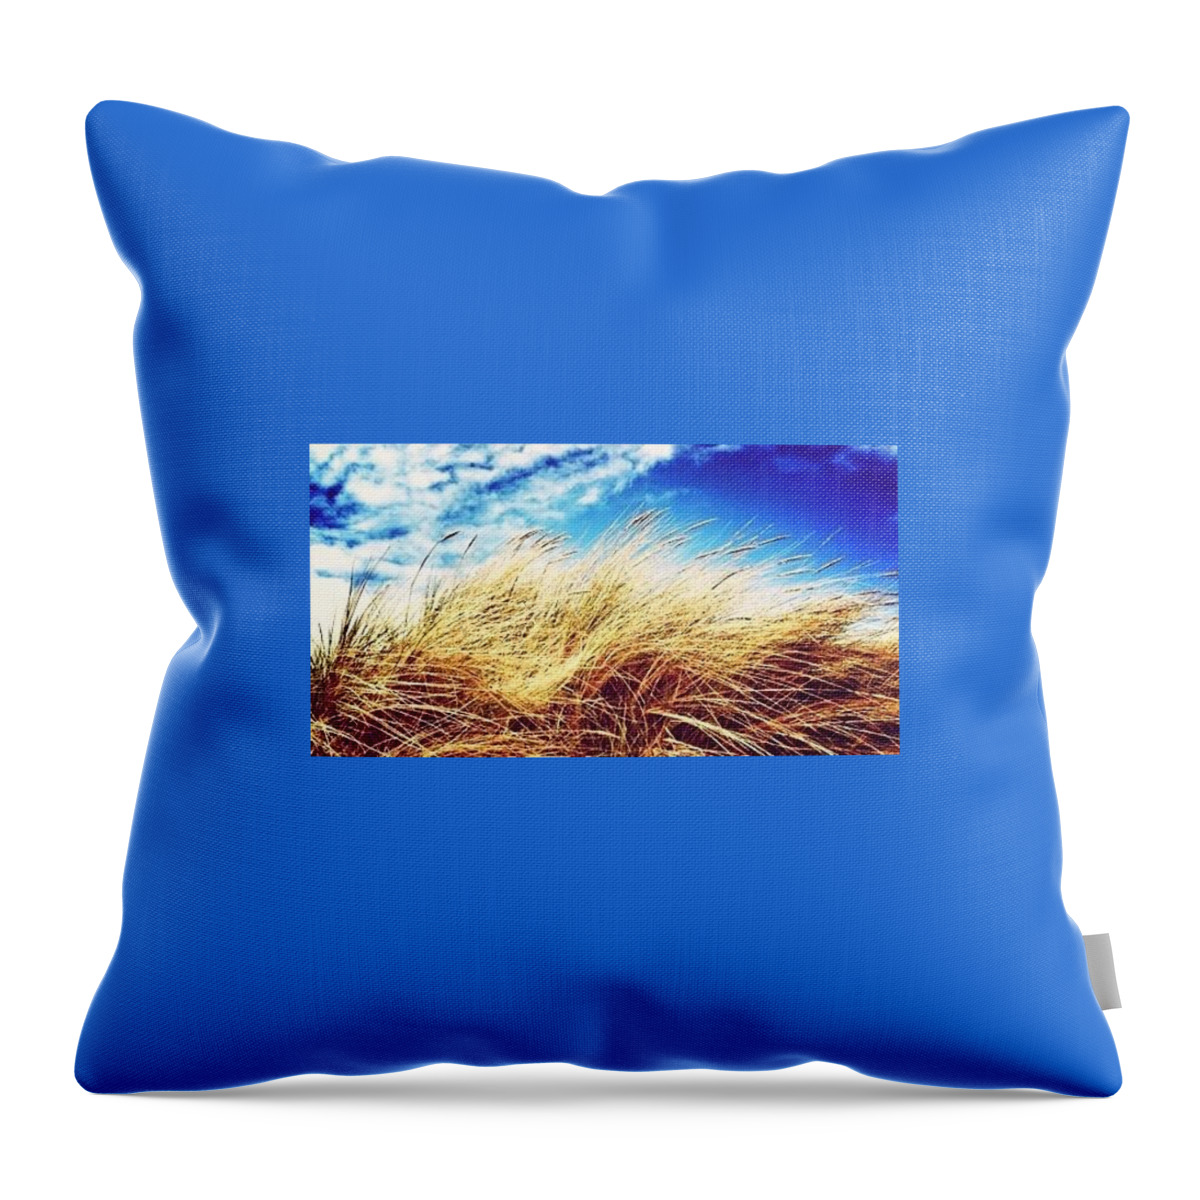 Seaside Throw Pillow featuring the photograph Sea Grass by Zoe Calvert